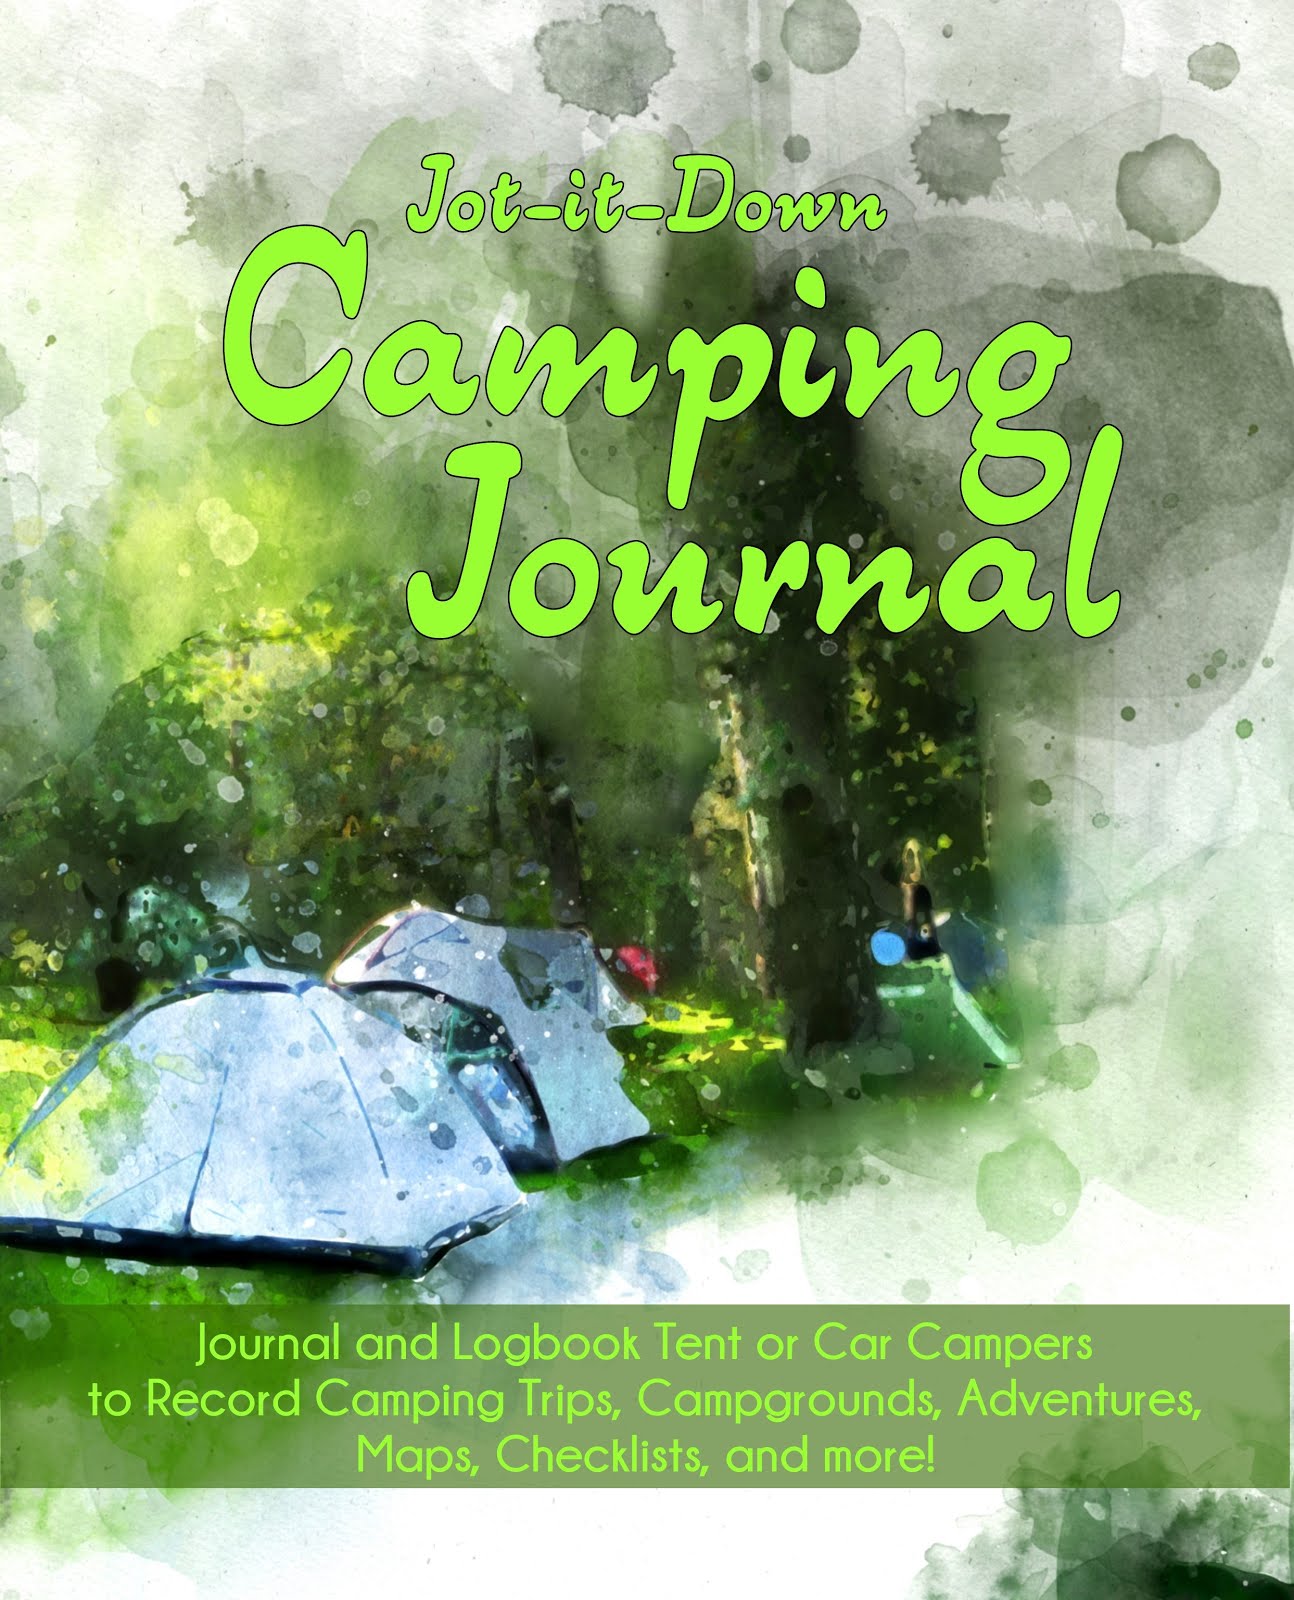 Jot it Down Camping Journal